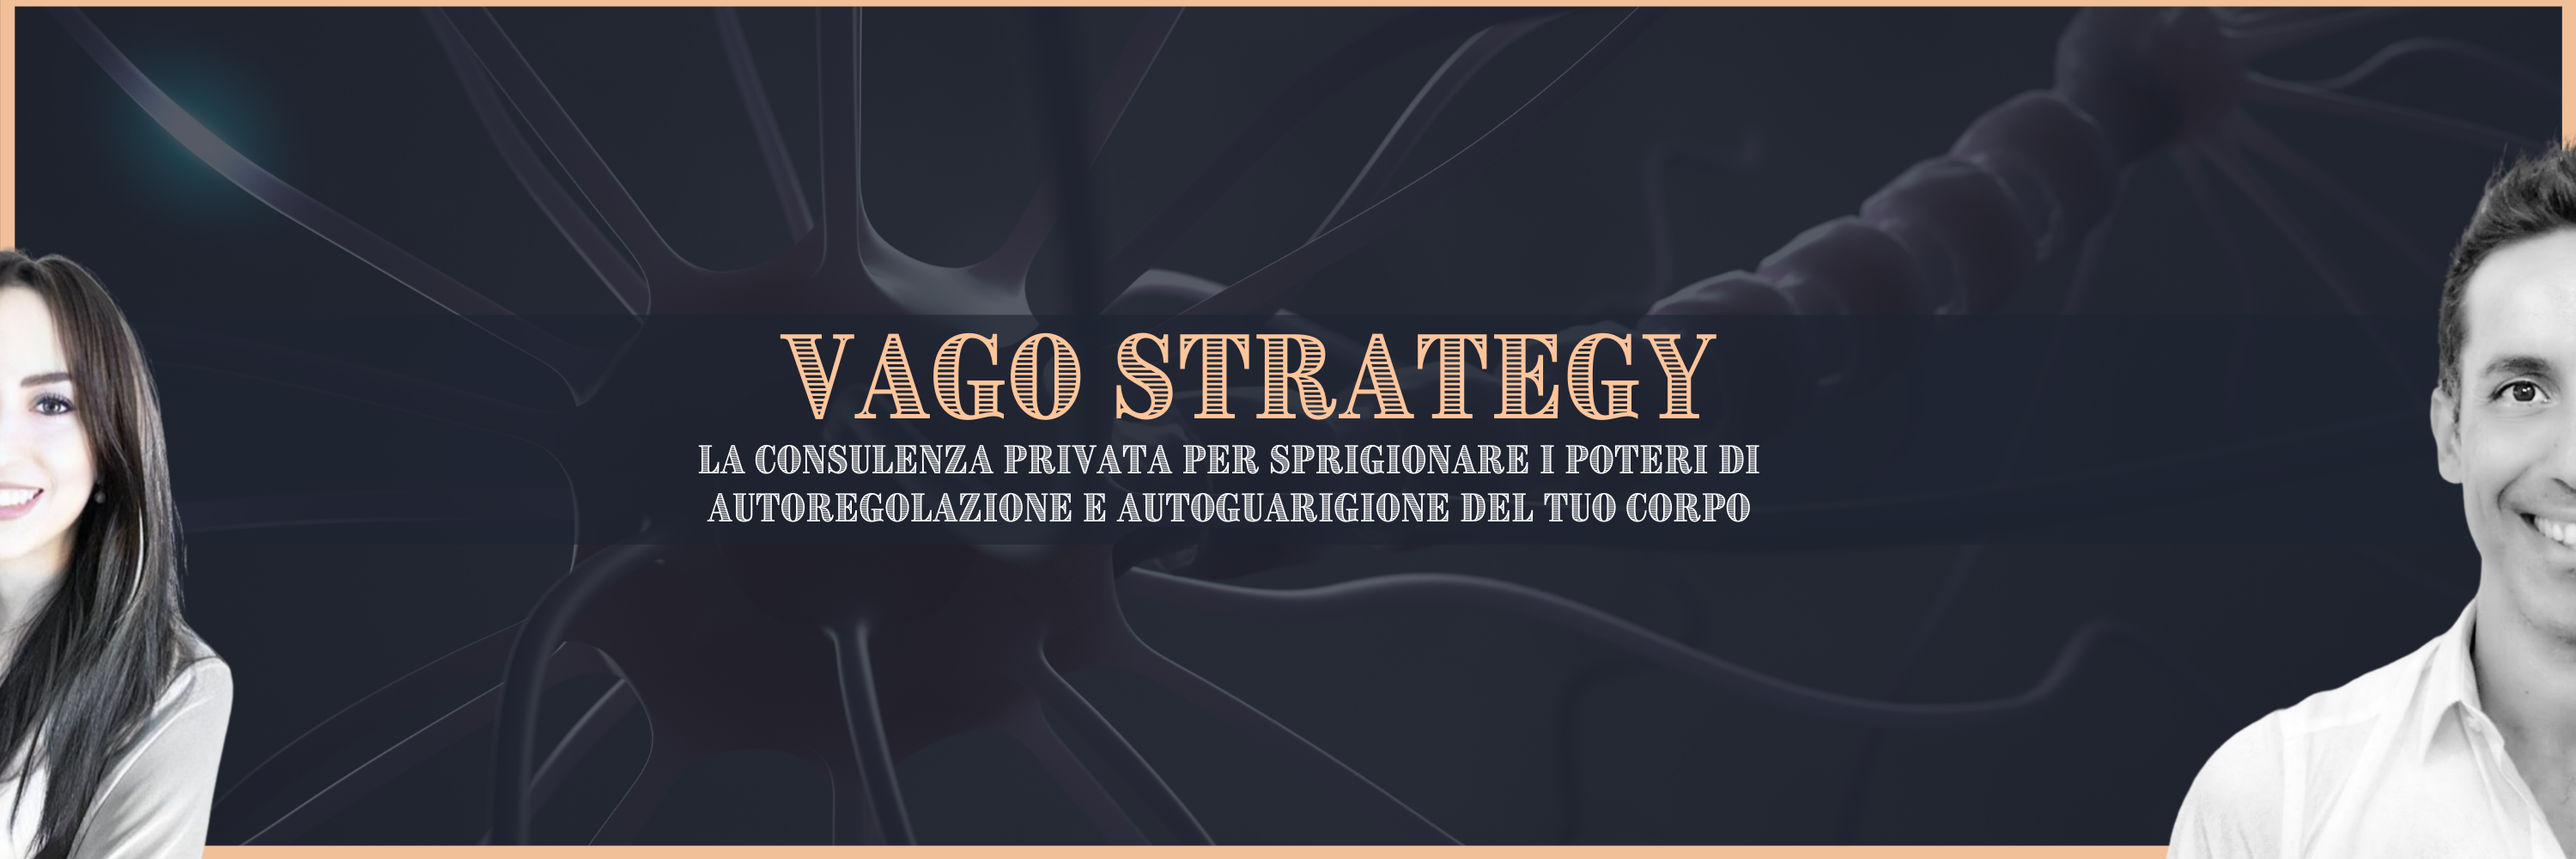 Vago Strategy 